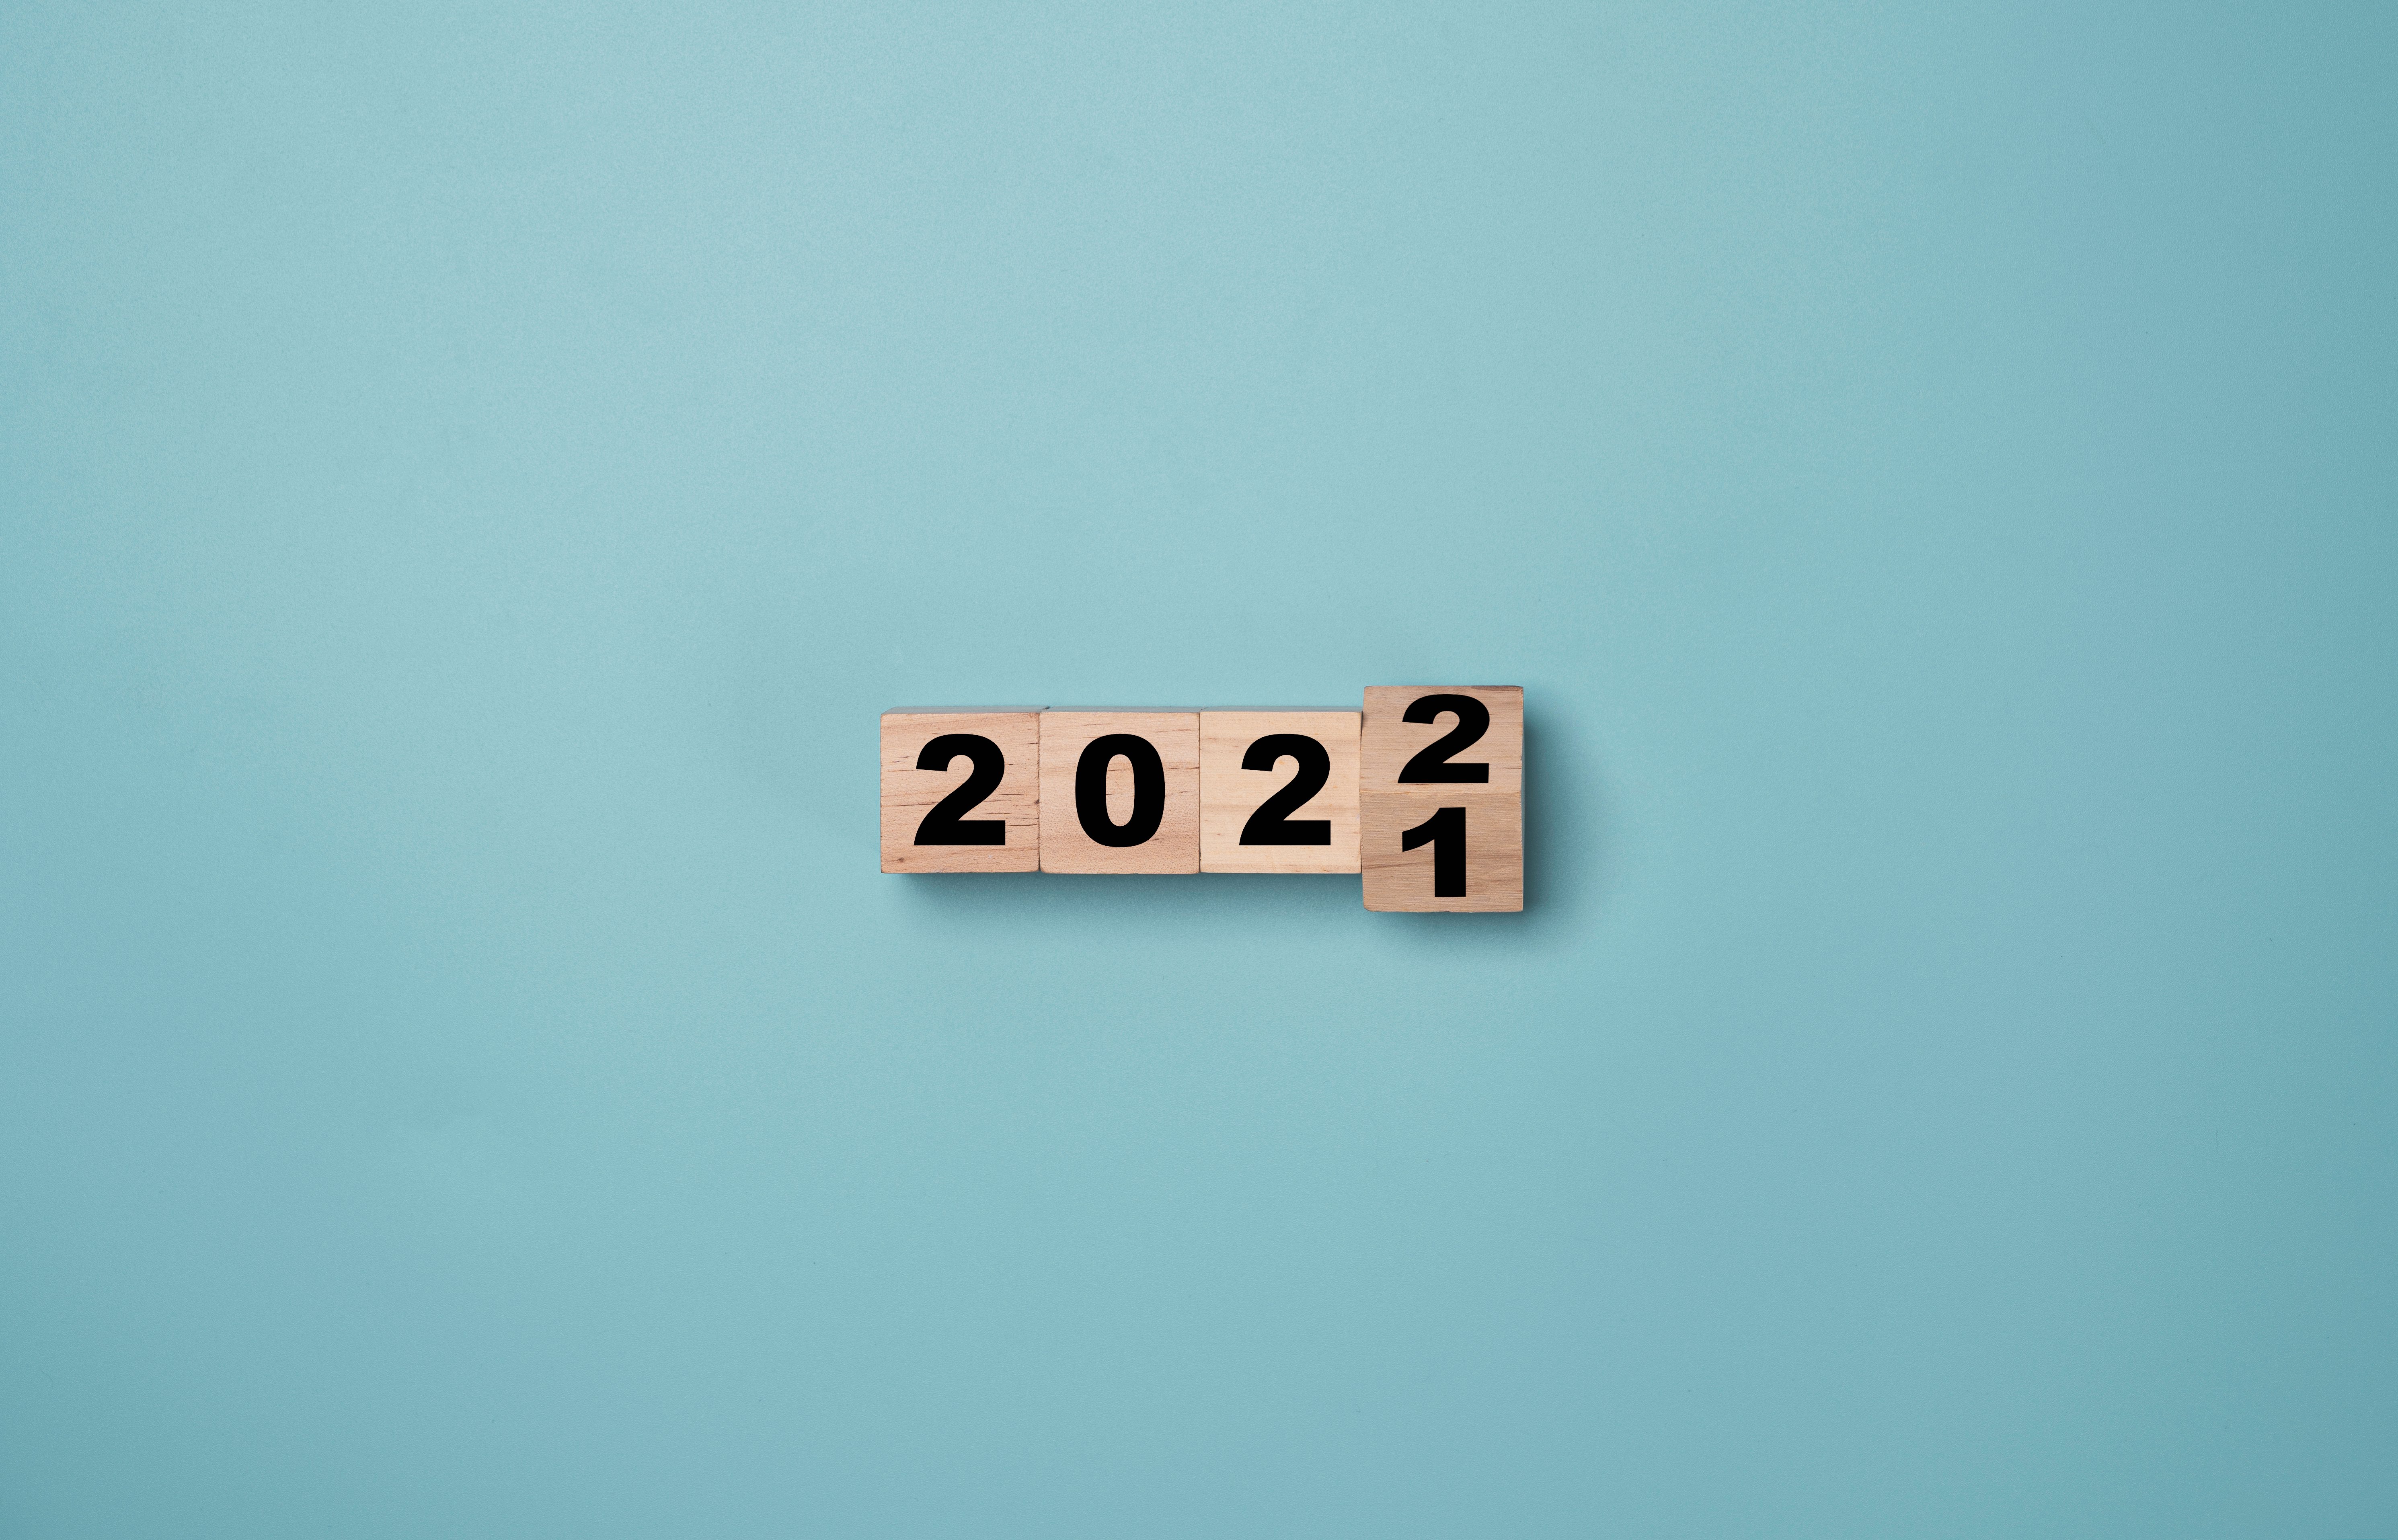 2022 new year